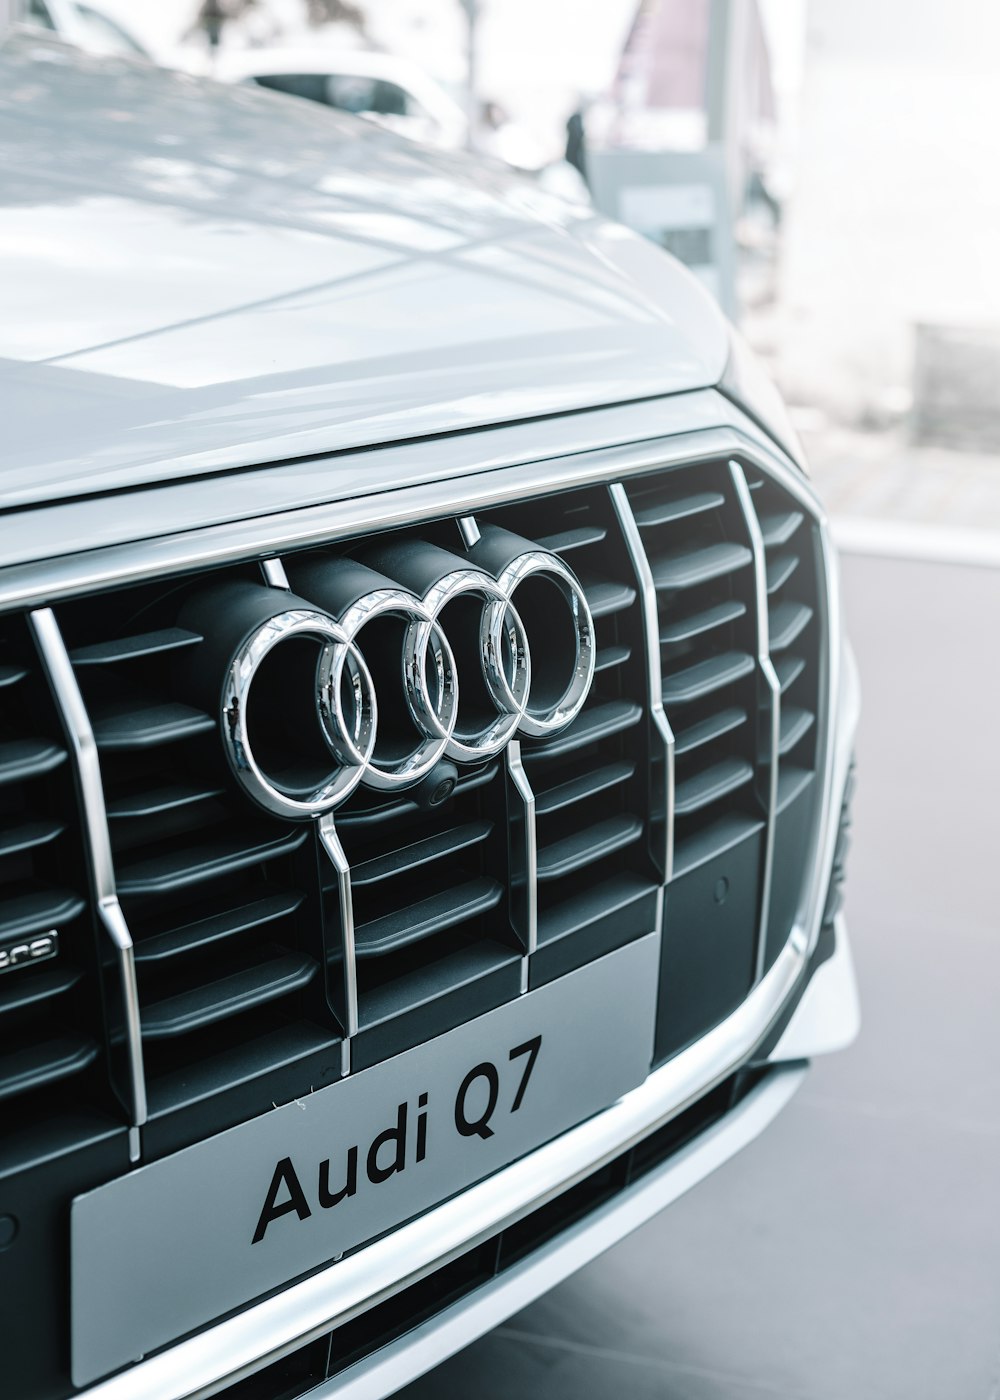 Audi Logo Pictures  Download Free Images on Unsplash